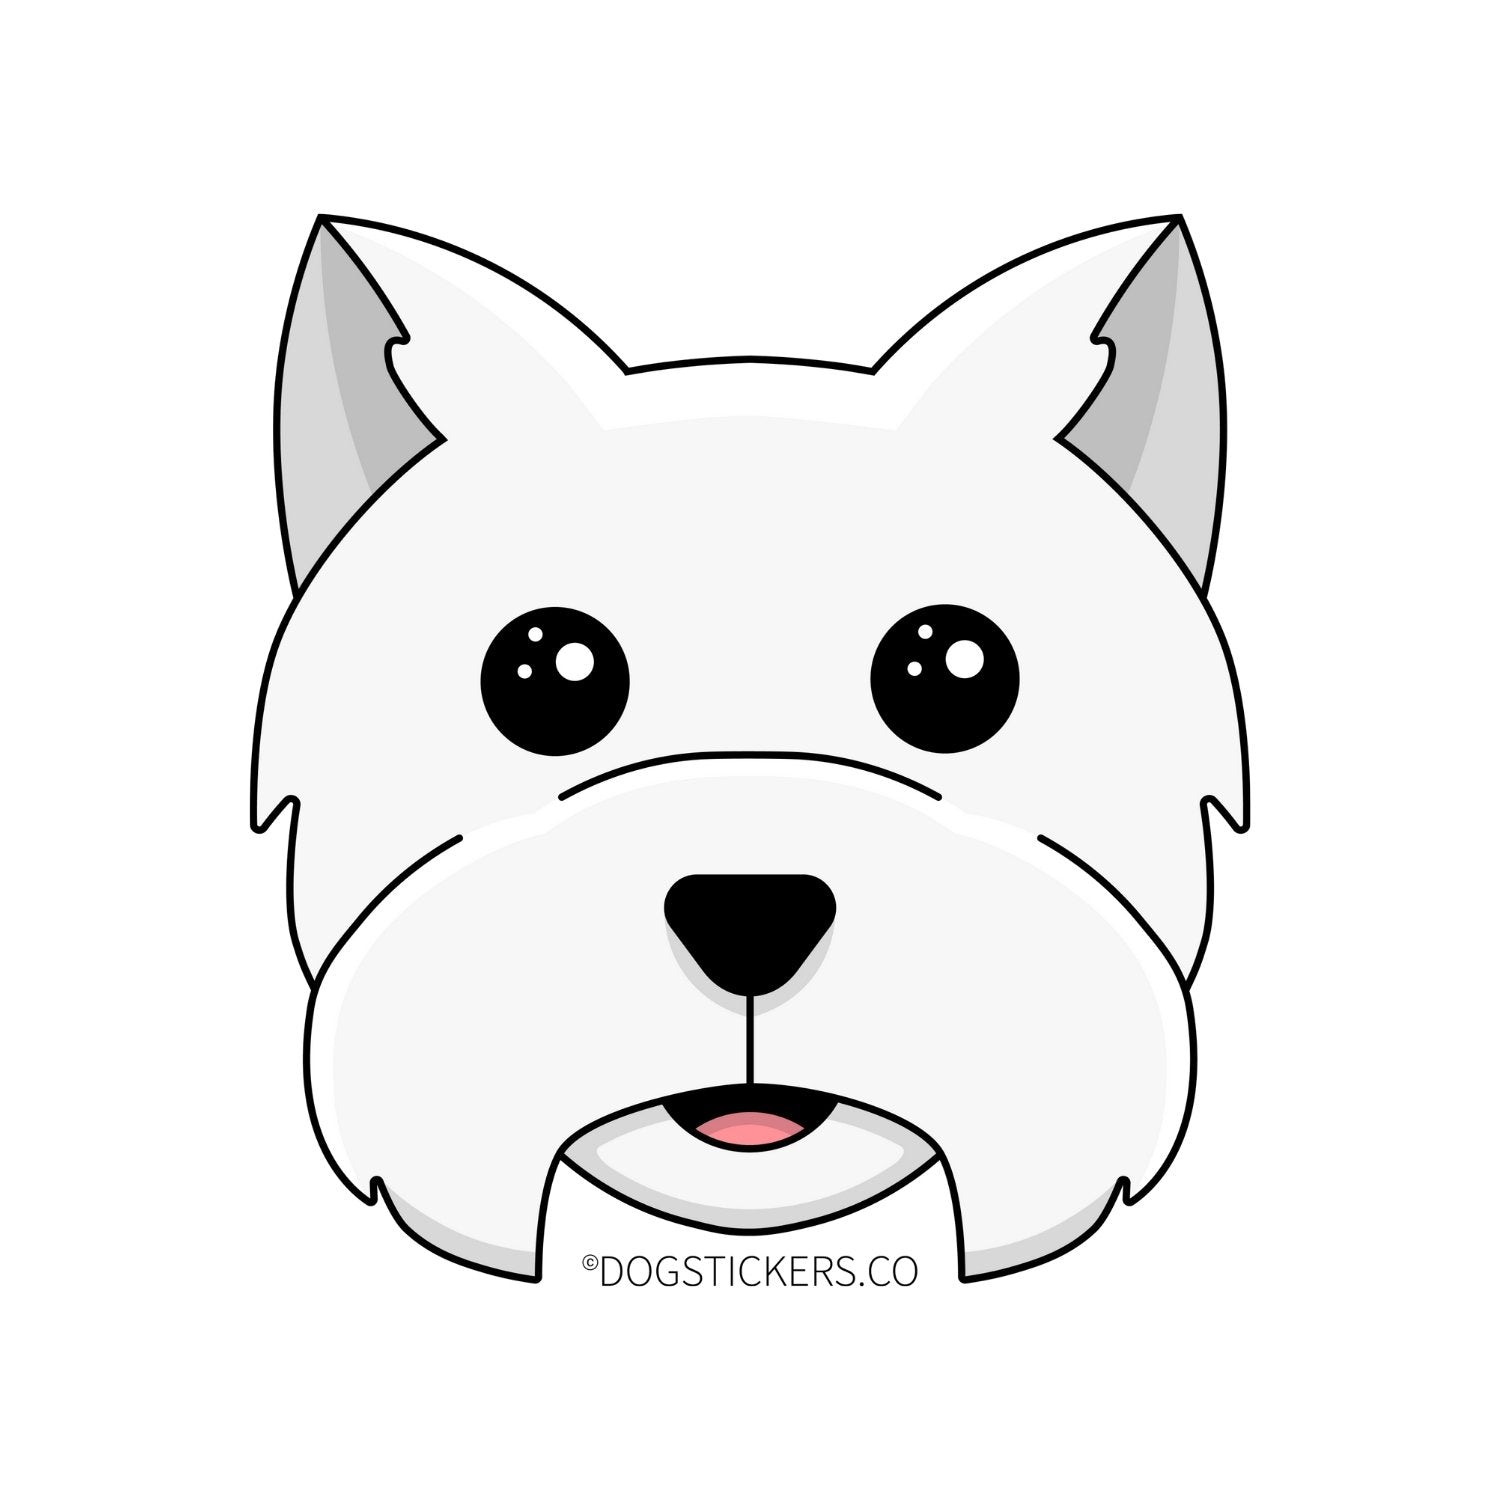 West Highland Terrier Sticker - Dogstickers.co